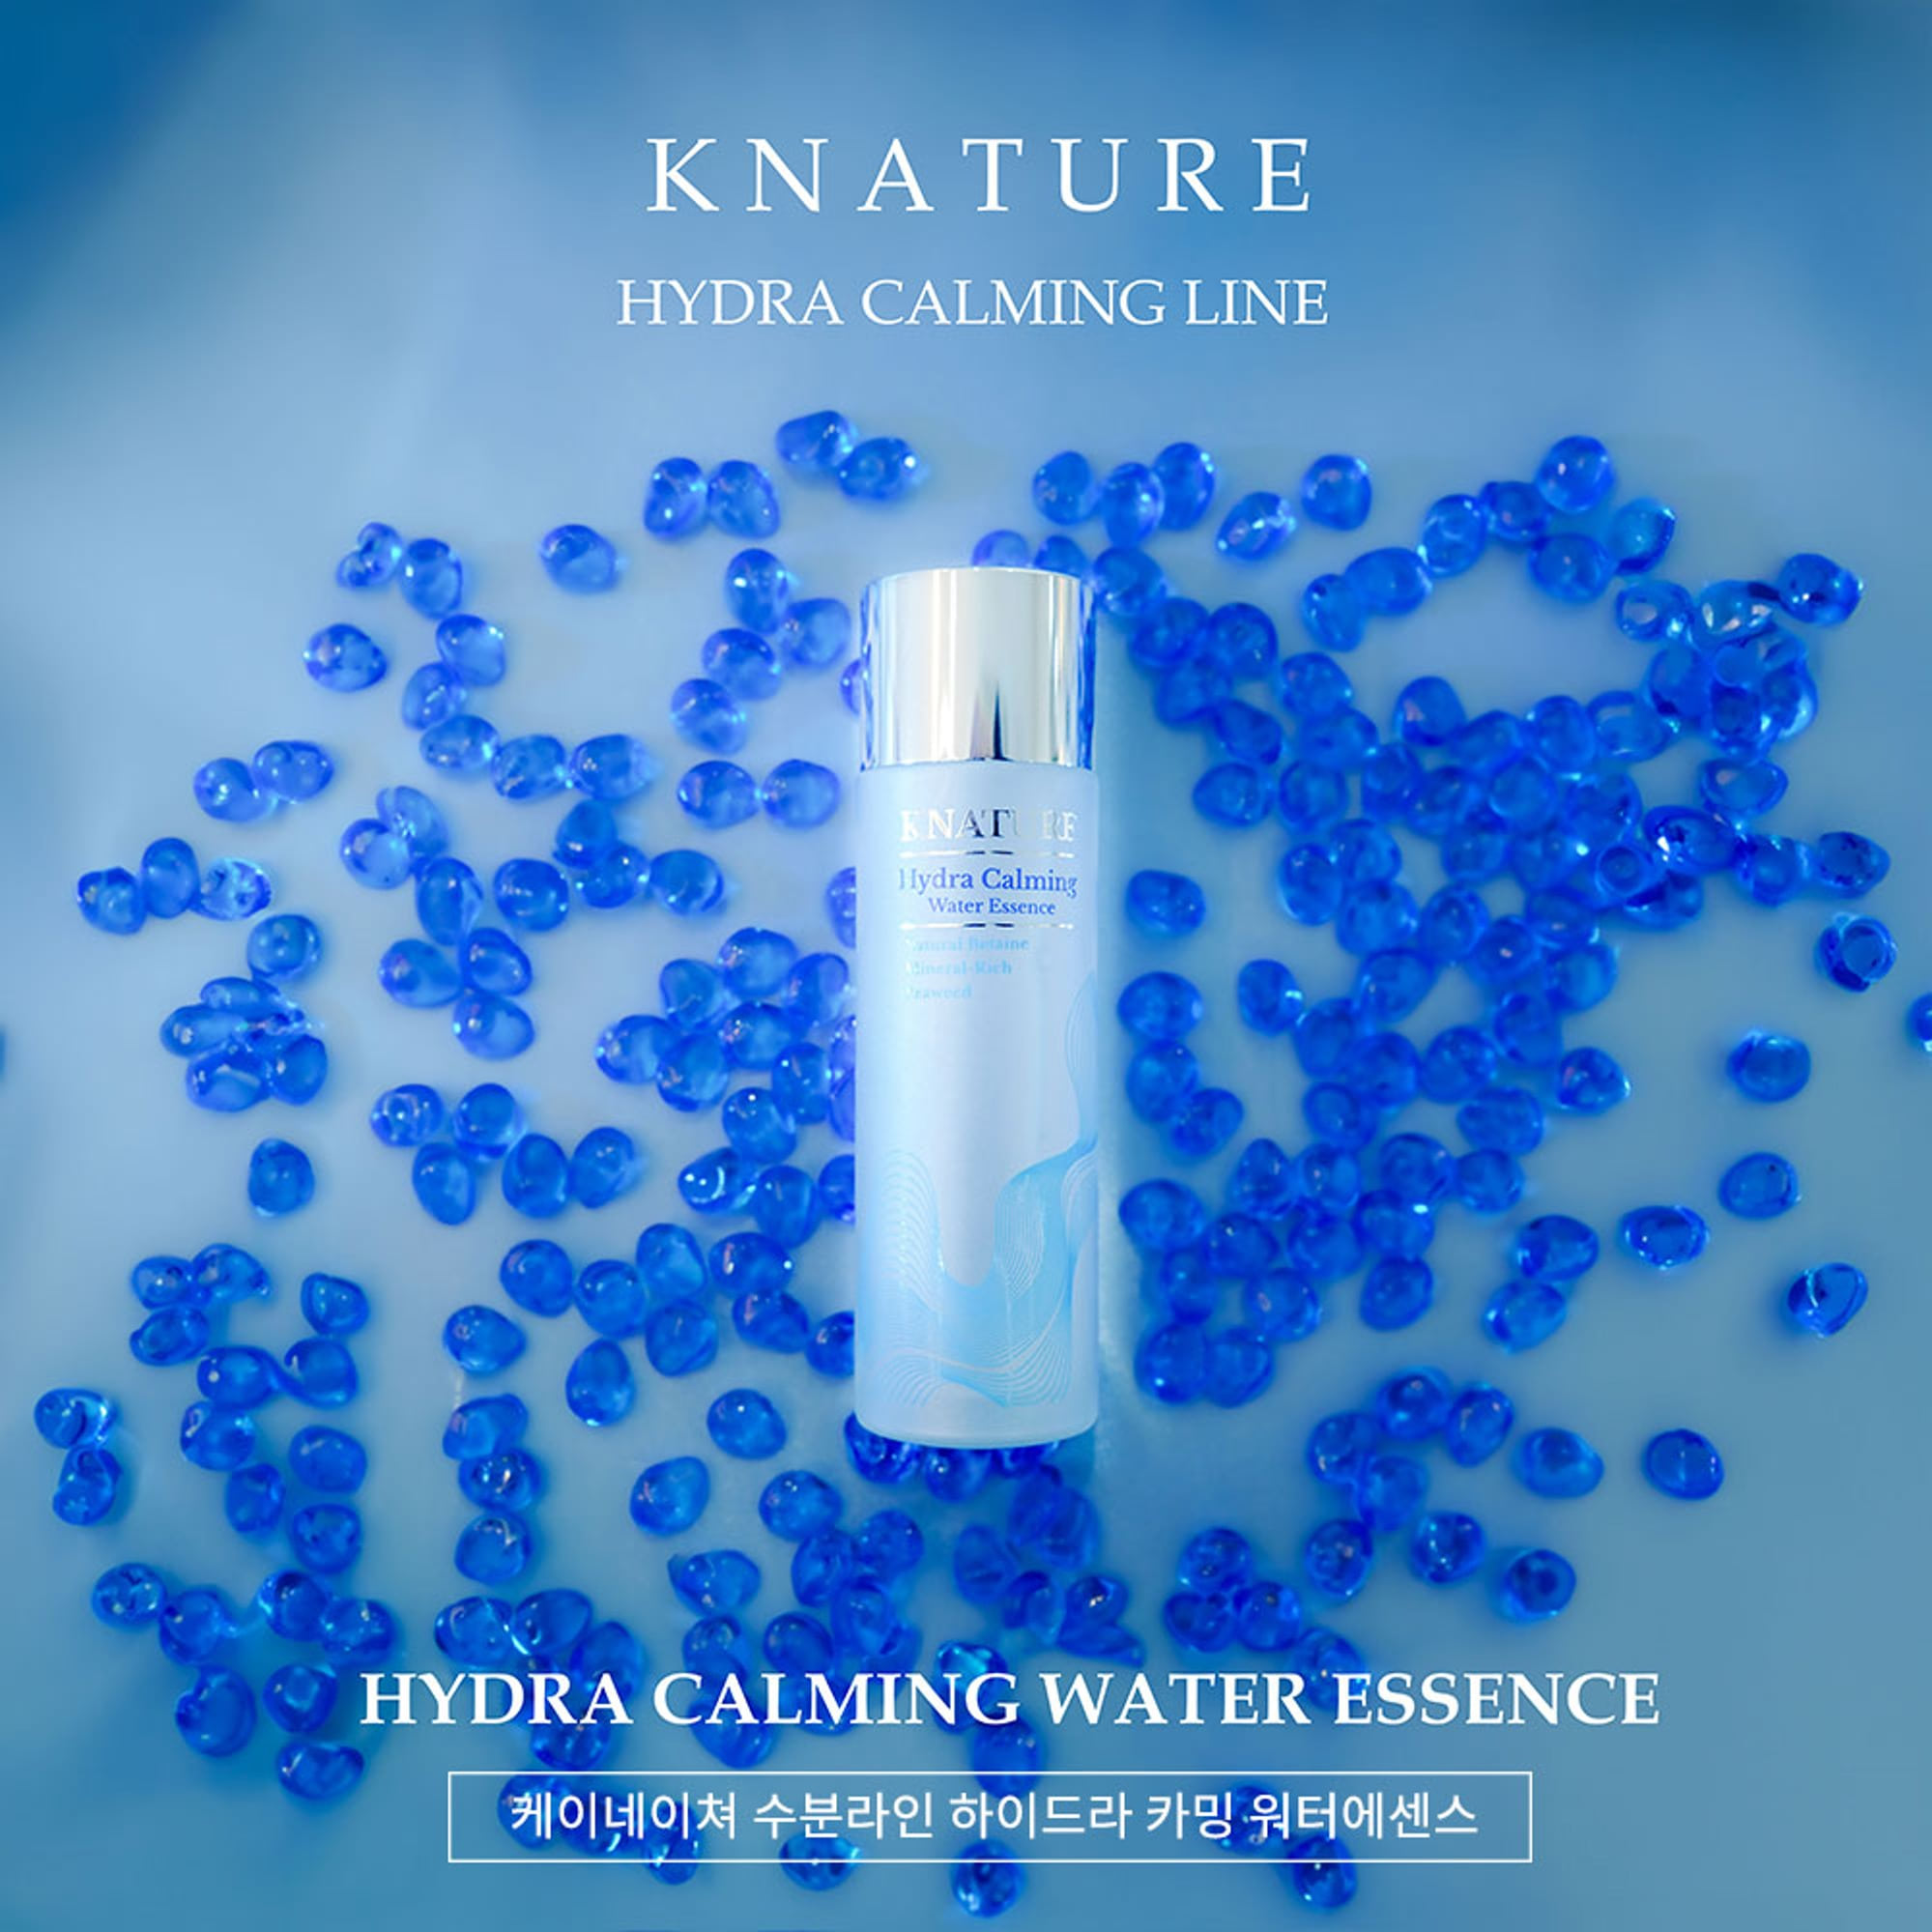 Hydra Calming Water Essence